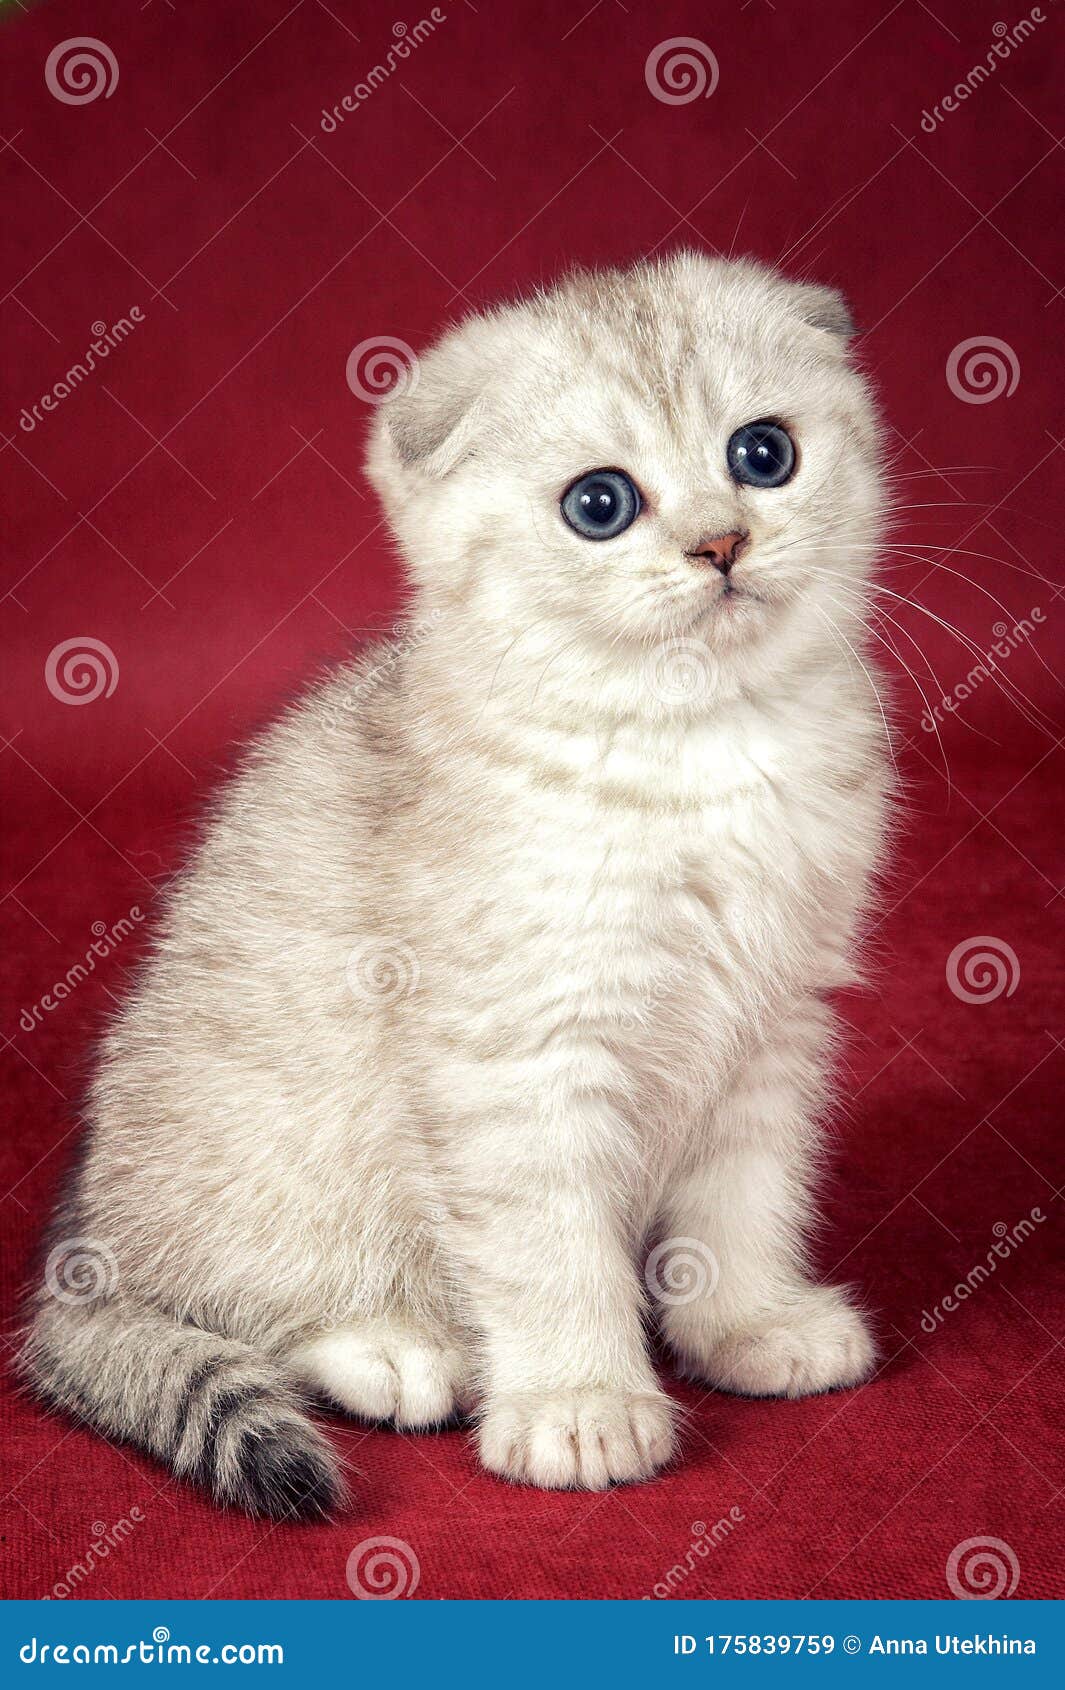 white kitten scottish fold cat on a red background